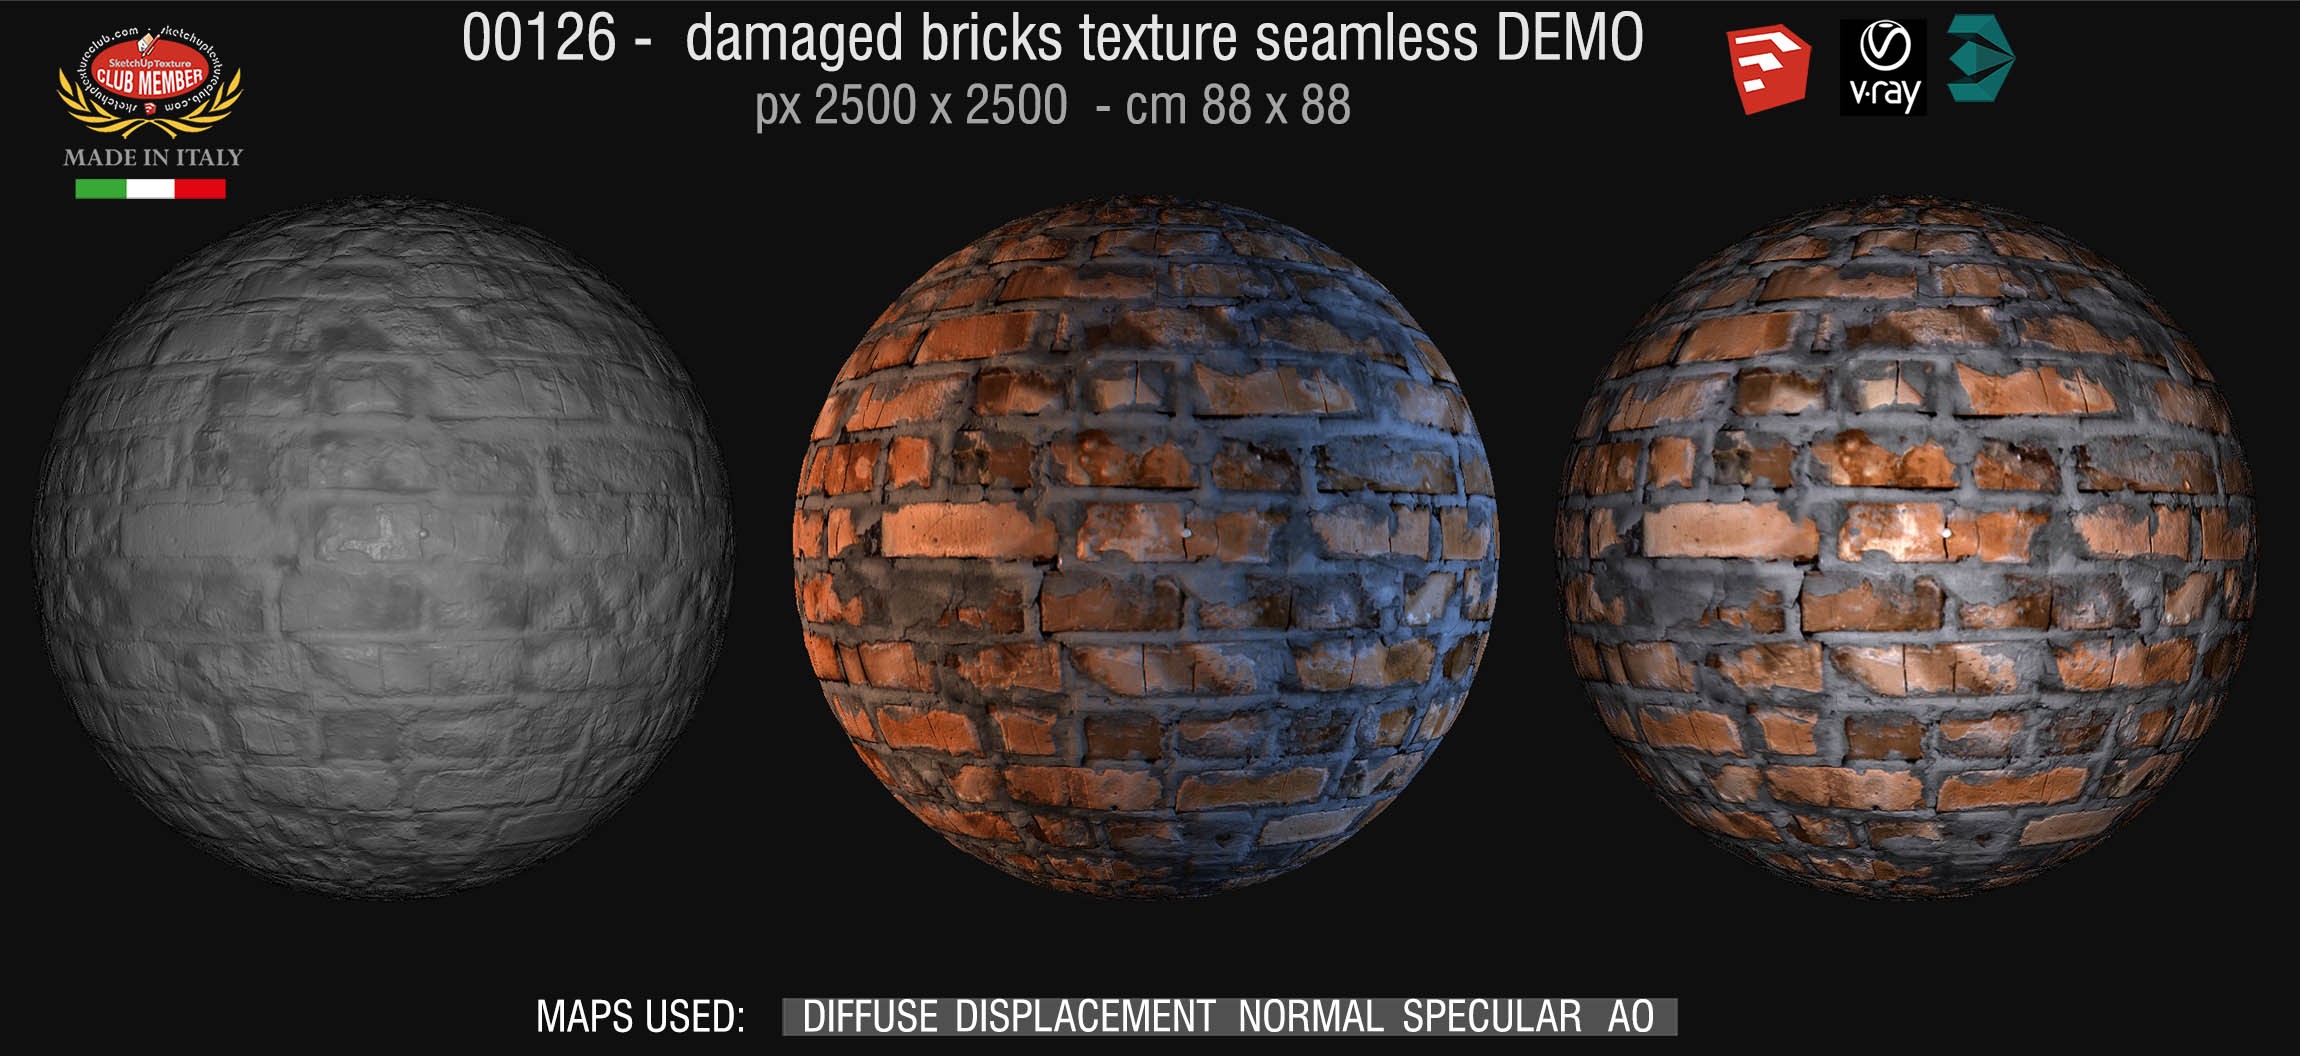 00126 HR Damaged bricks texture seamless + maps DEMO